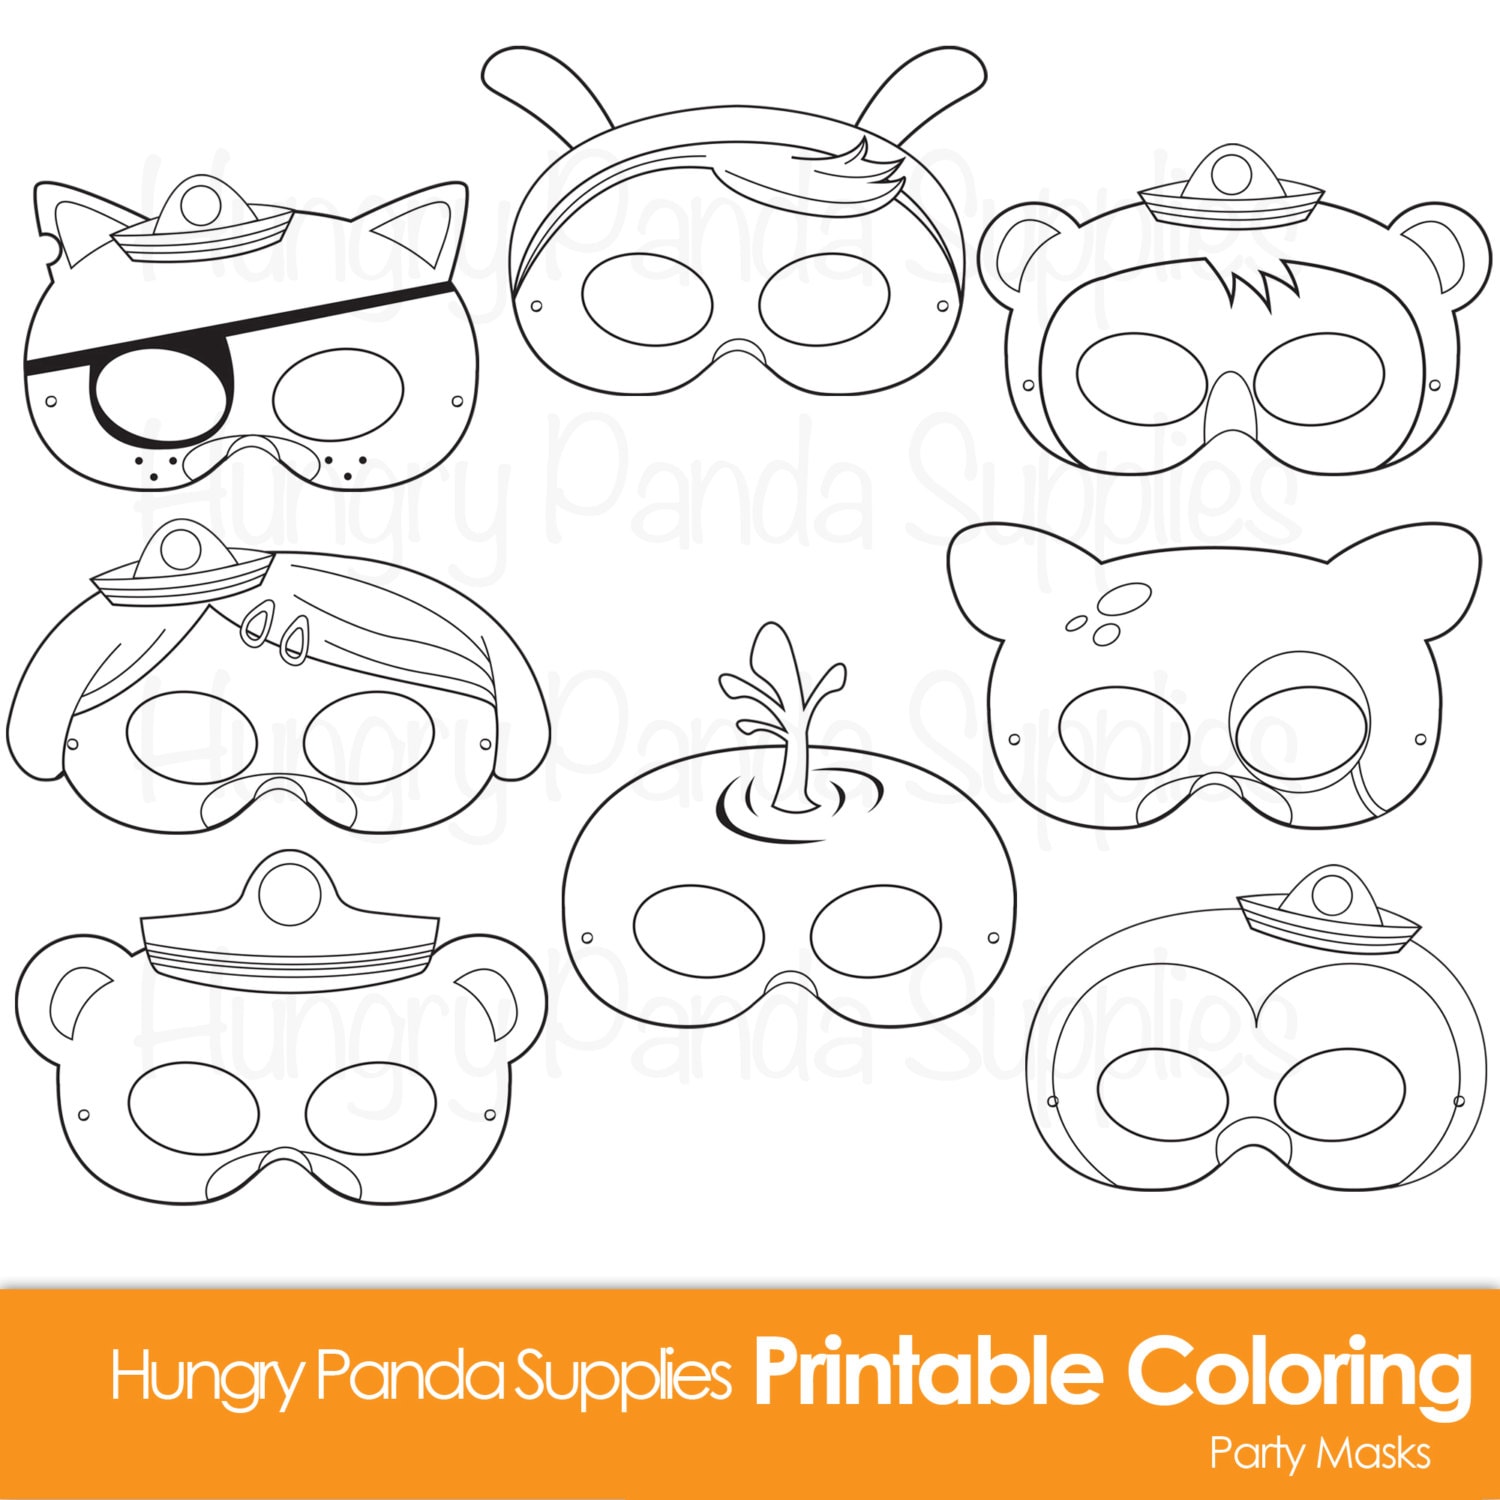 Animal Heroes Printable Coloring Masks, bunny mask, cartoon masks,  printable masks, character masks, bear mask, cat mask, otter mask, octo